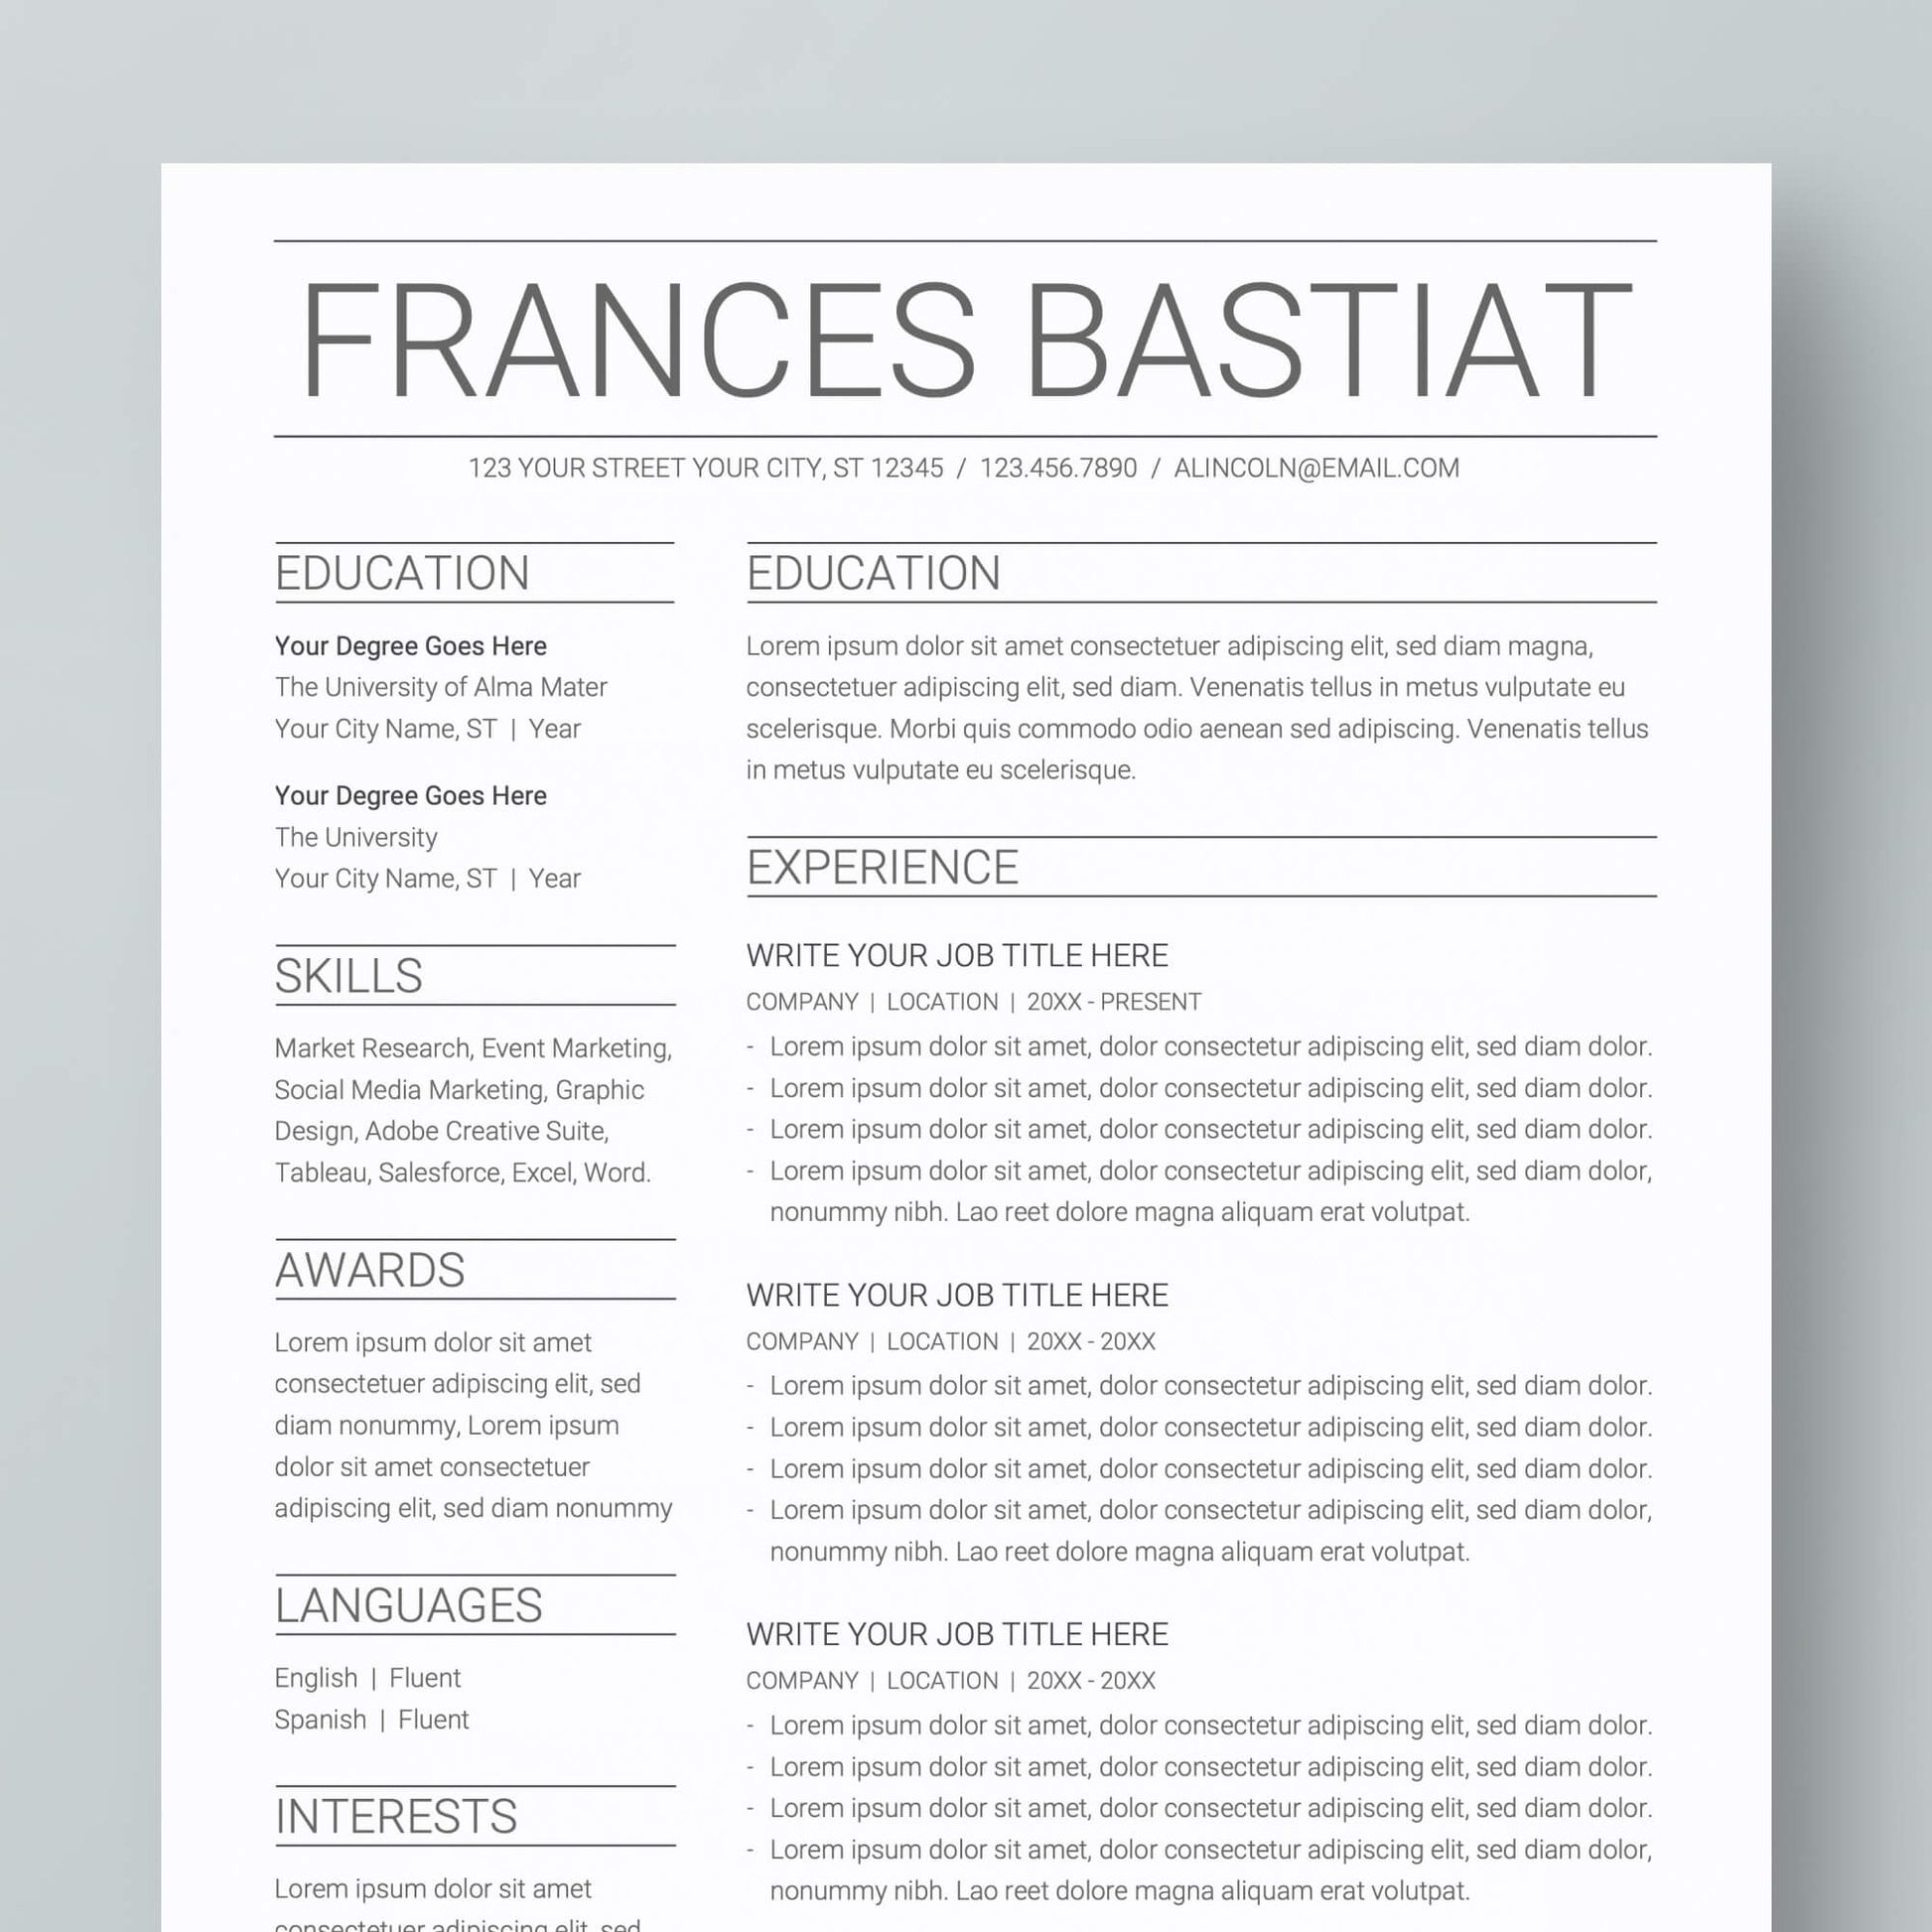 Resume Template: Frances Bastiat - MioDocs